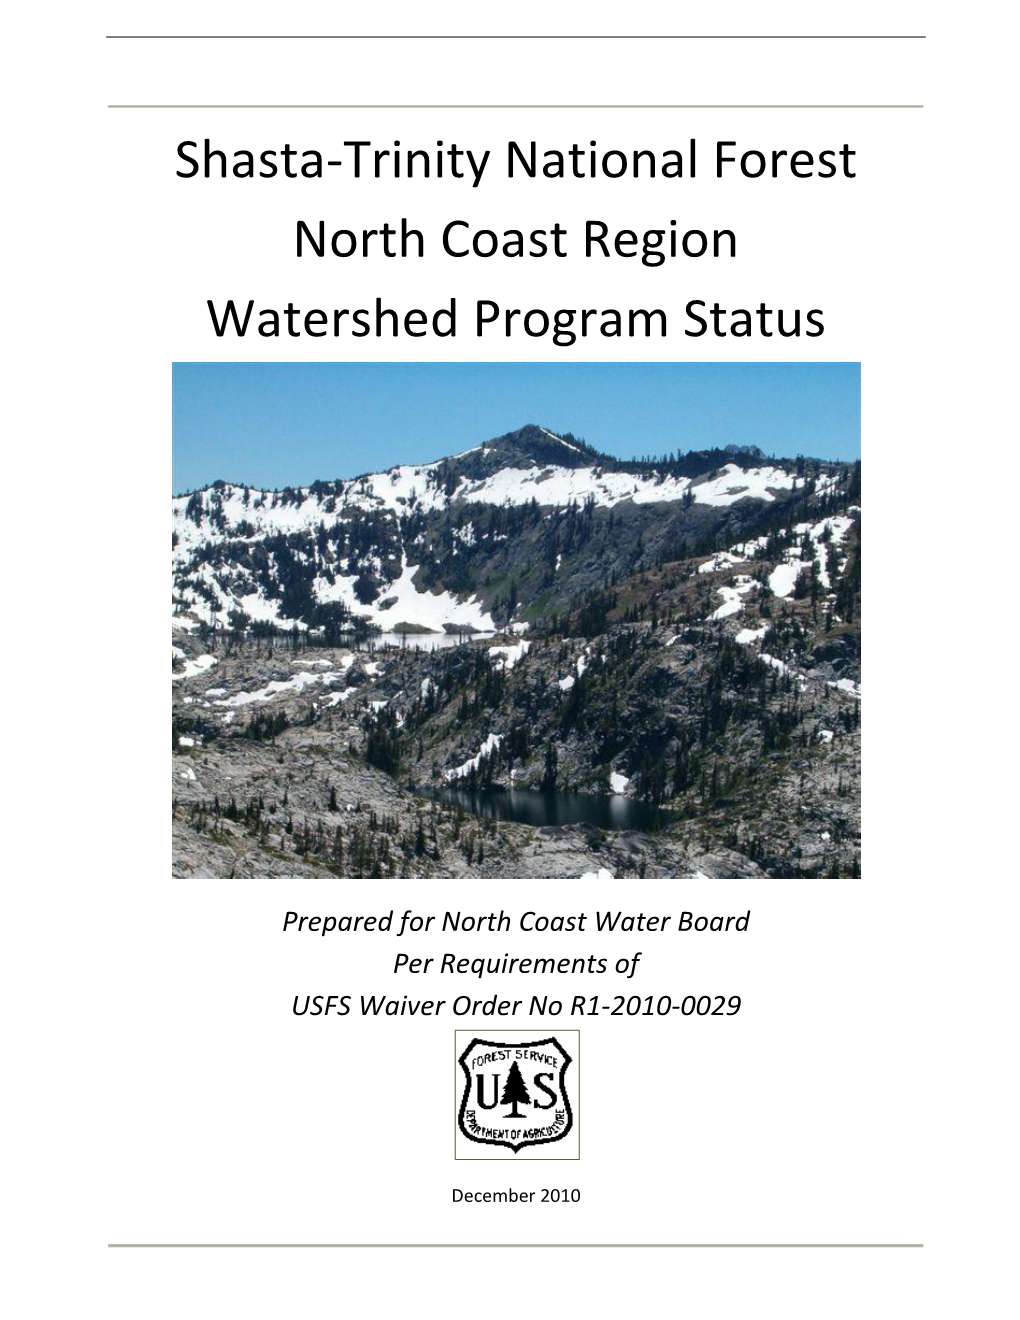 North Coast Region Watershed Program Status